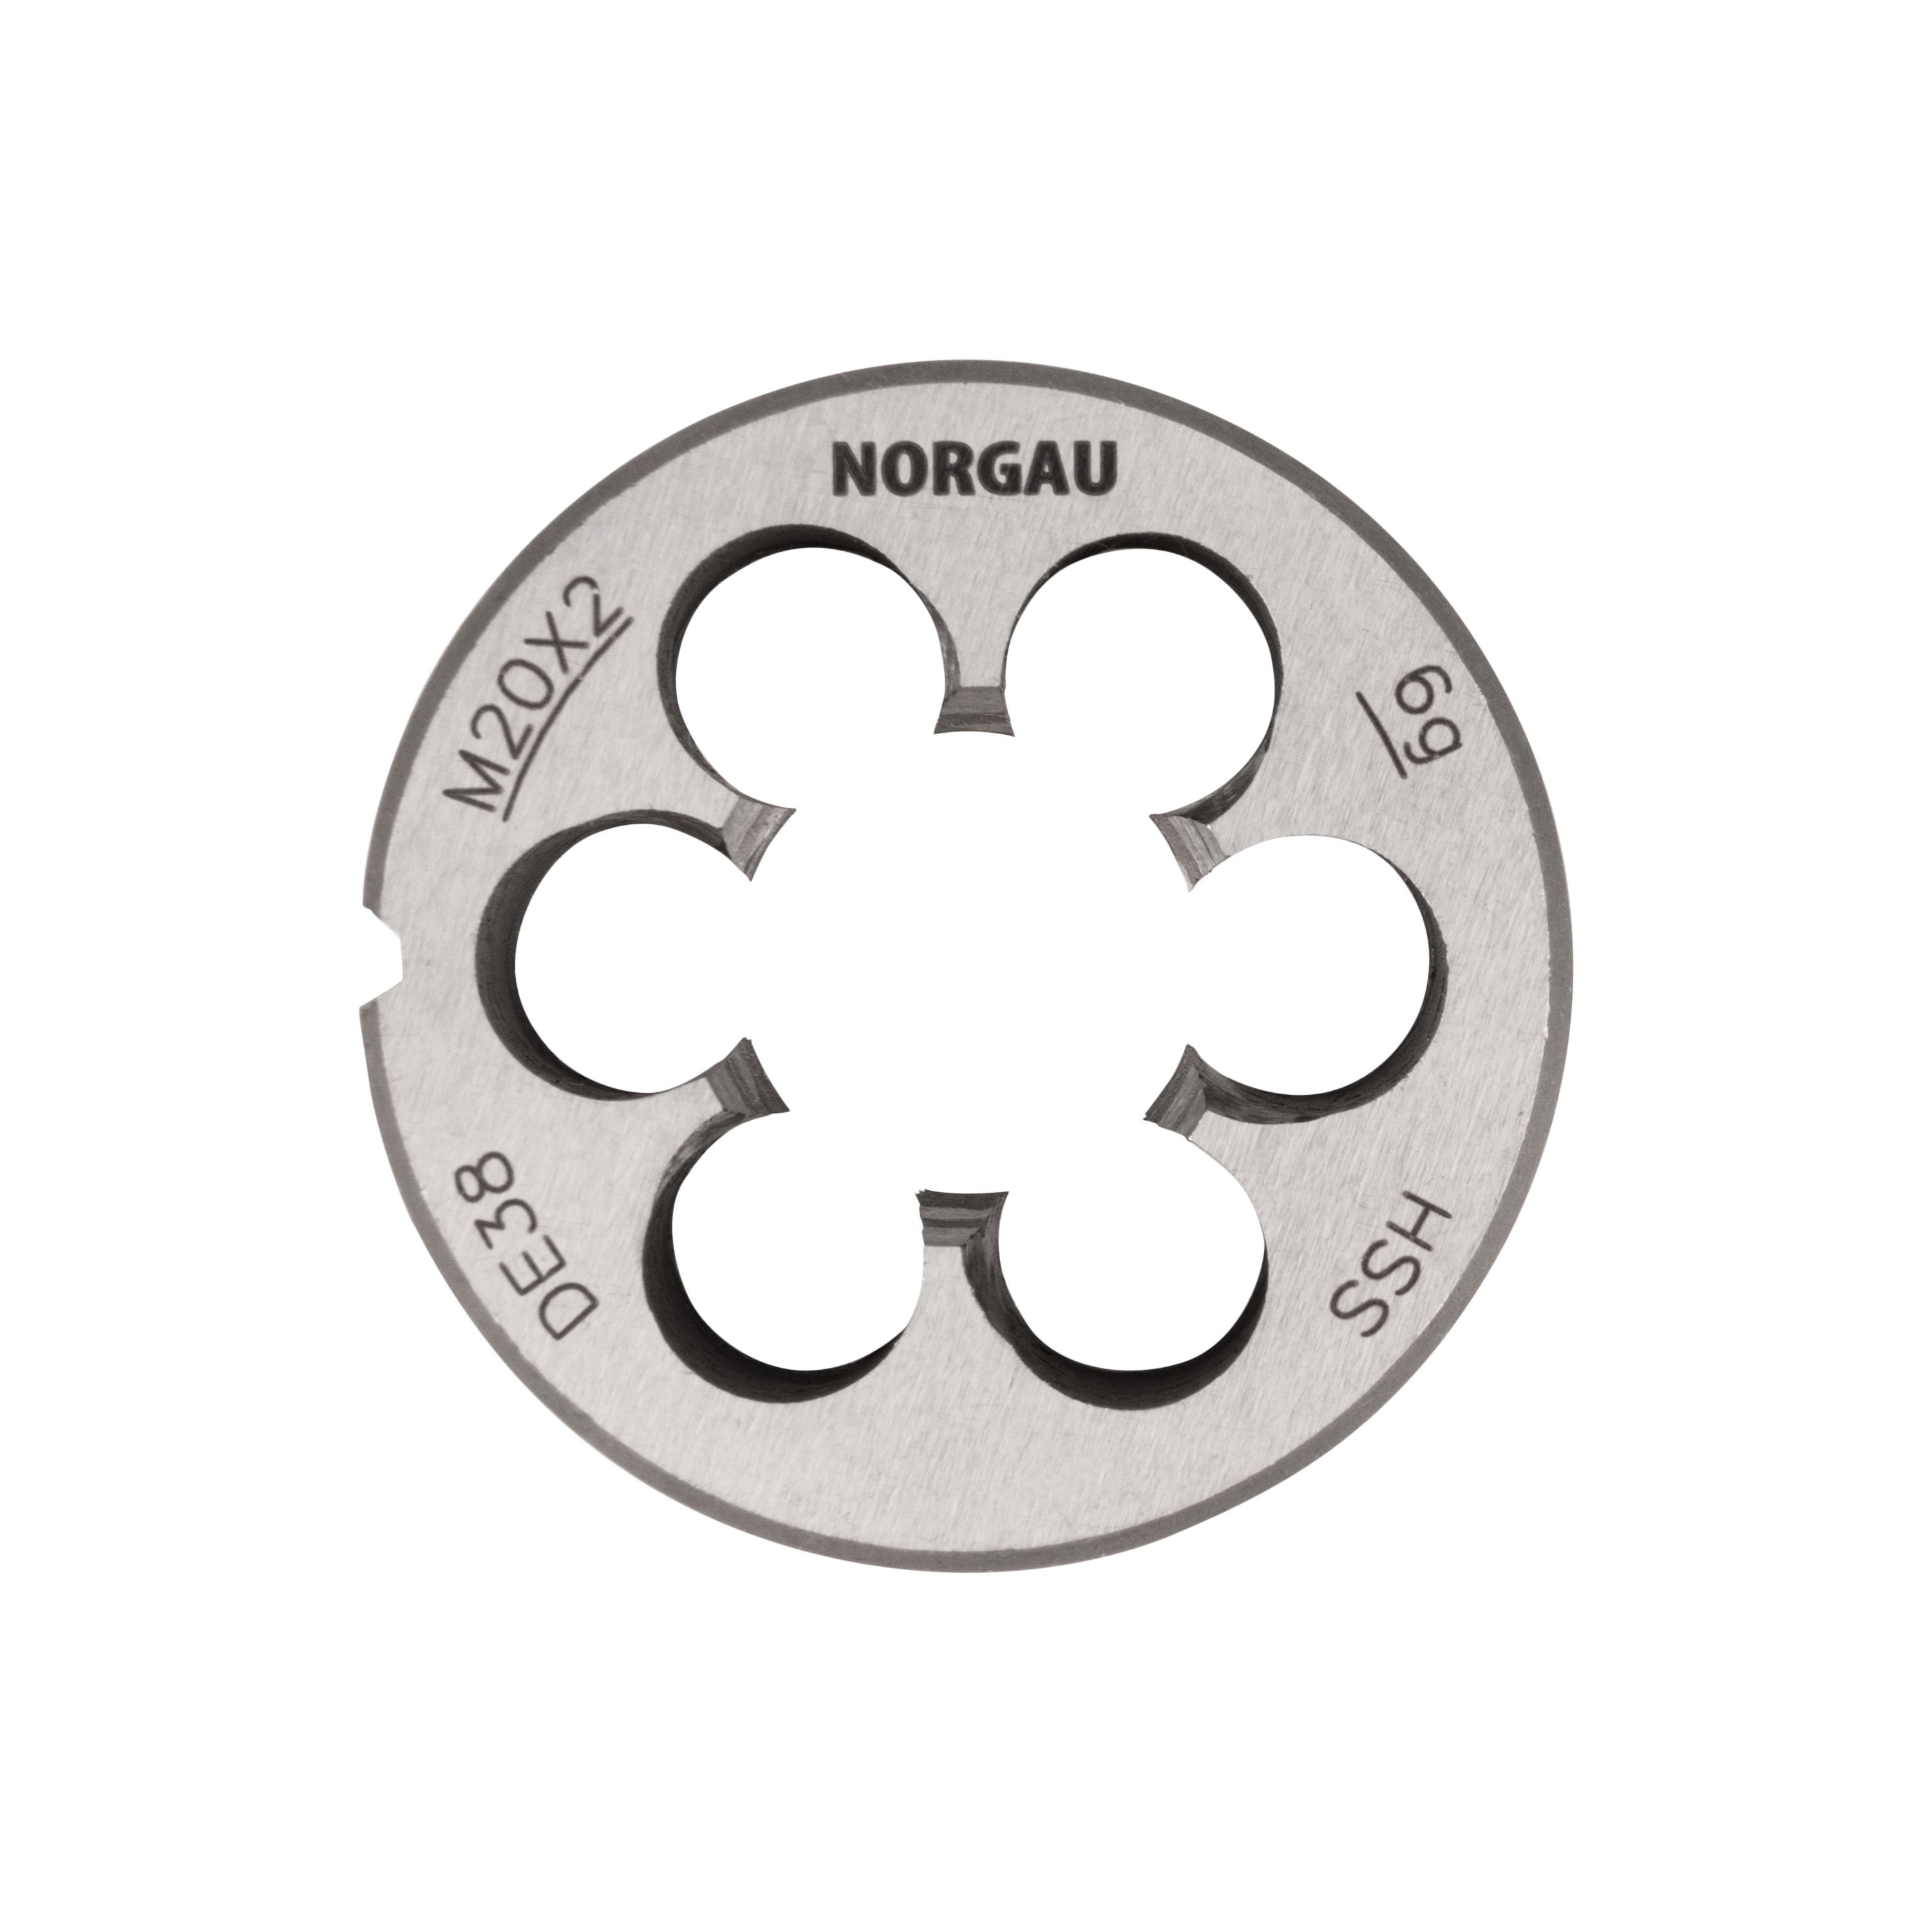 Плашка NORGAU Industrial М20х1.5х45 мм, метрическая, угол 60°, по DIN223, HSS плашка м30х3 5 мм norgau industrial метрическая угол 60° по din223 hss